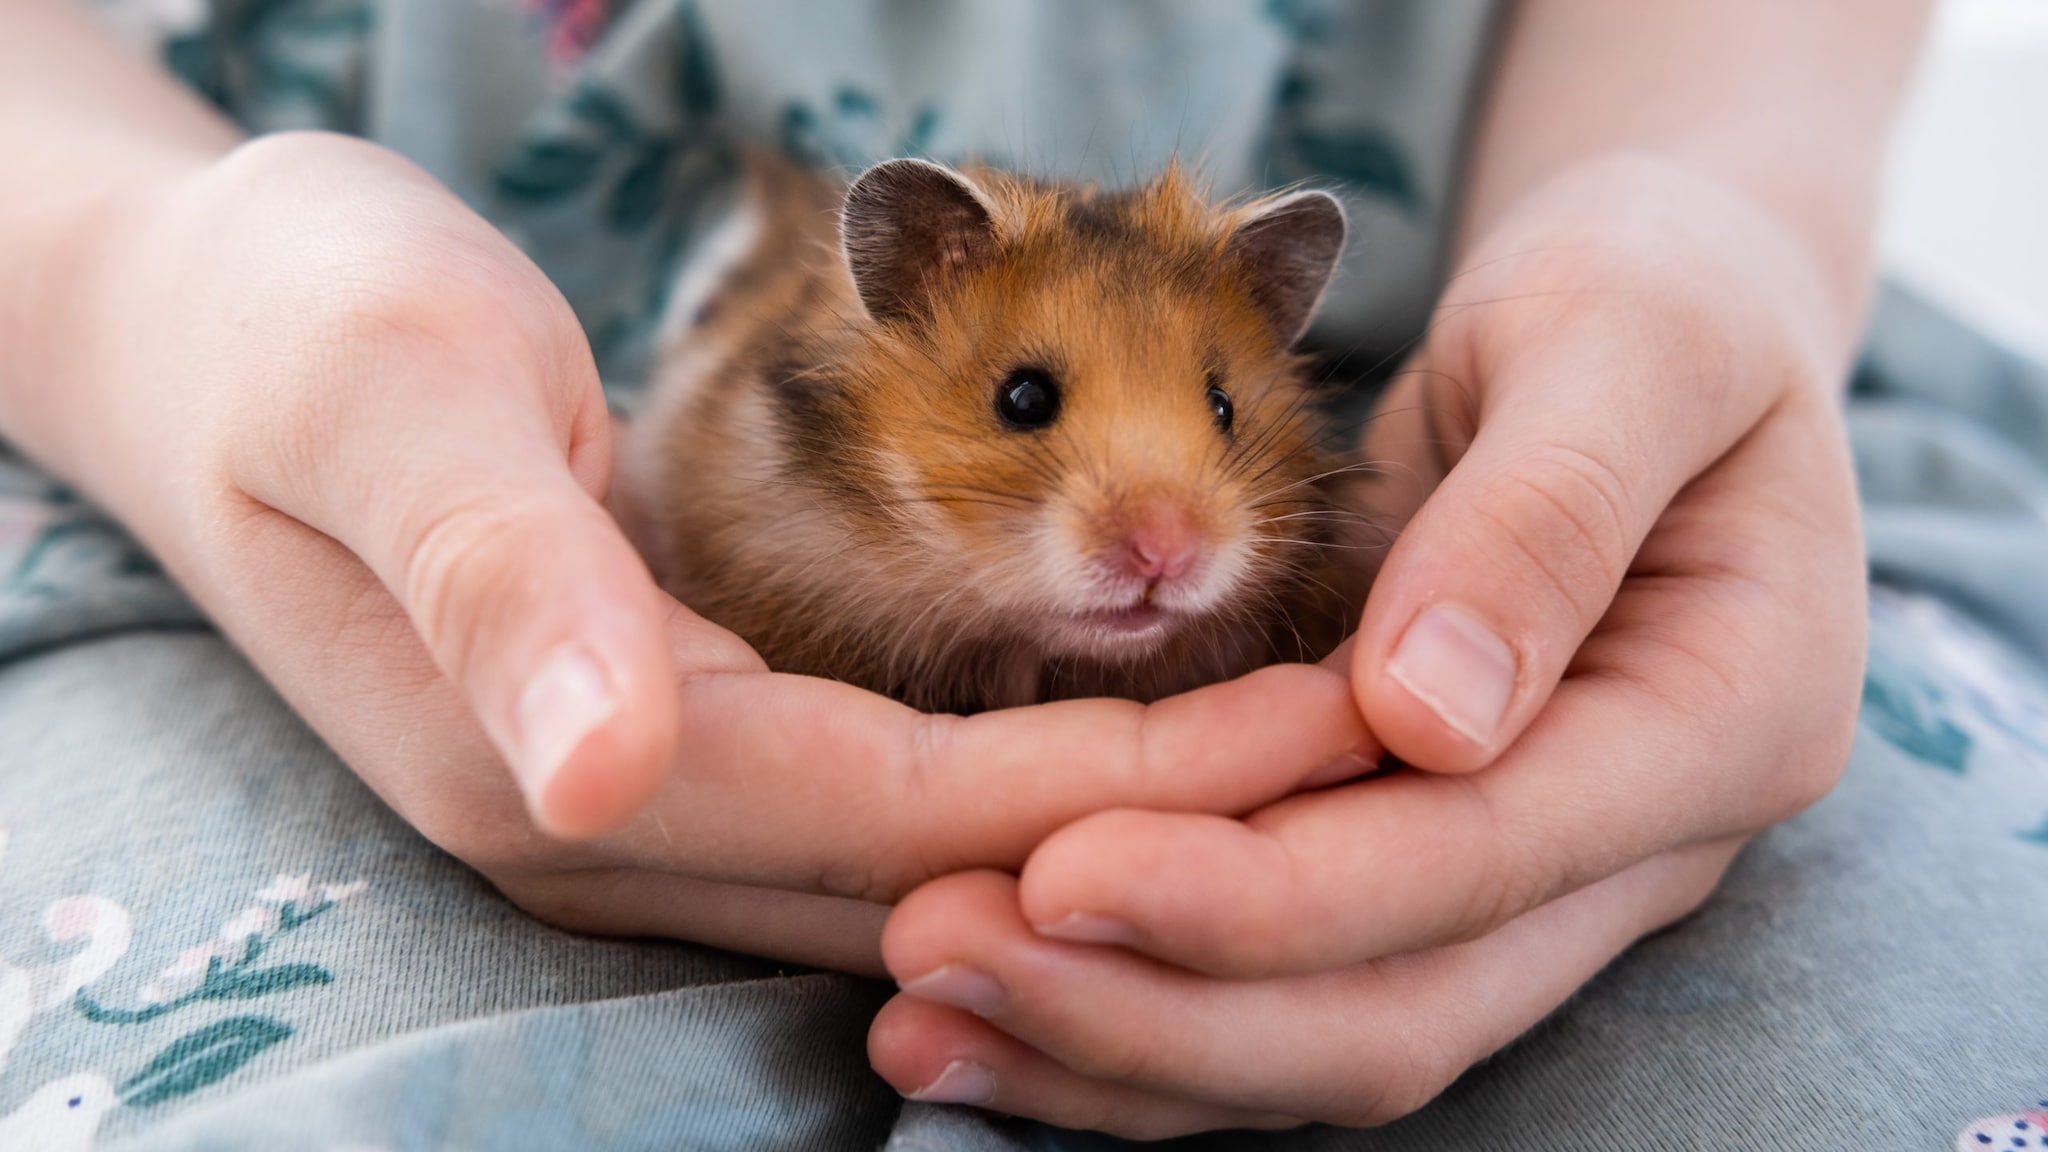 pet hamster being held in a child's hands